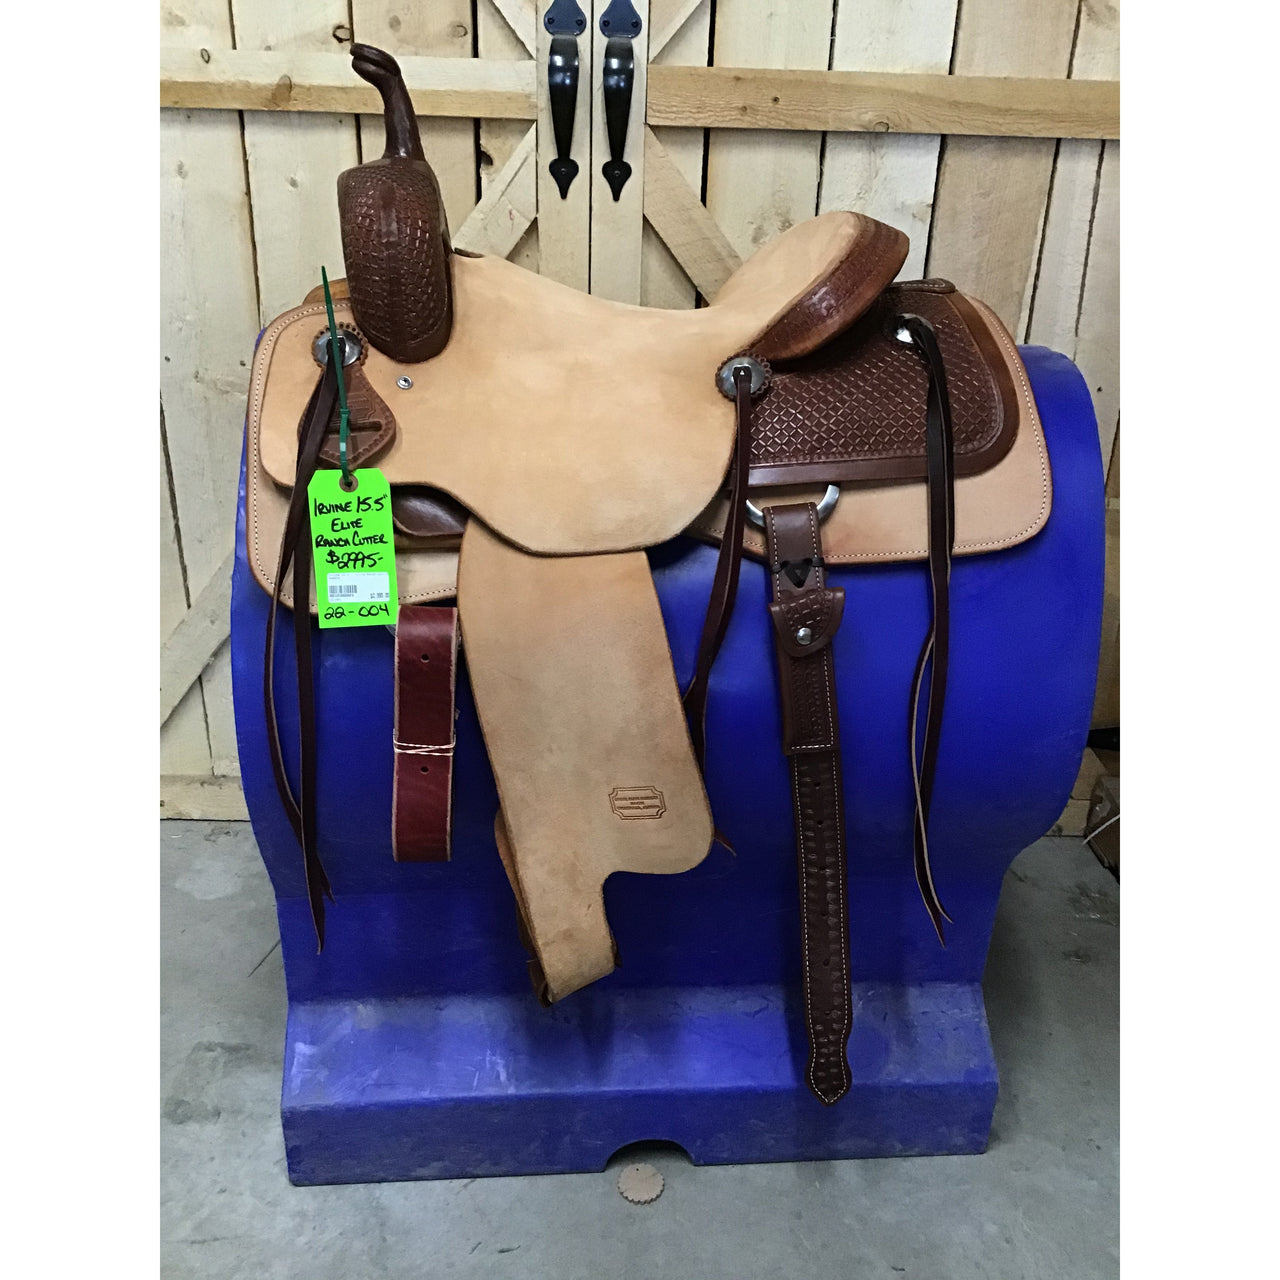 Irvine 15.5"   Elite Ranch Cutting Saddle